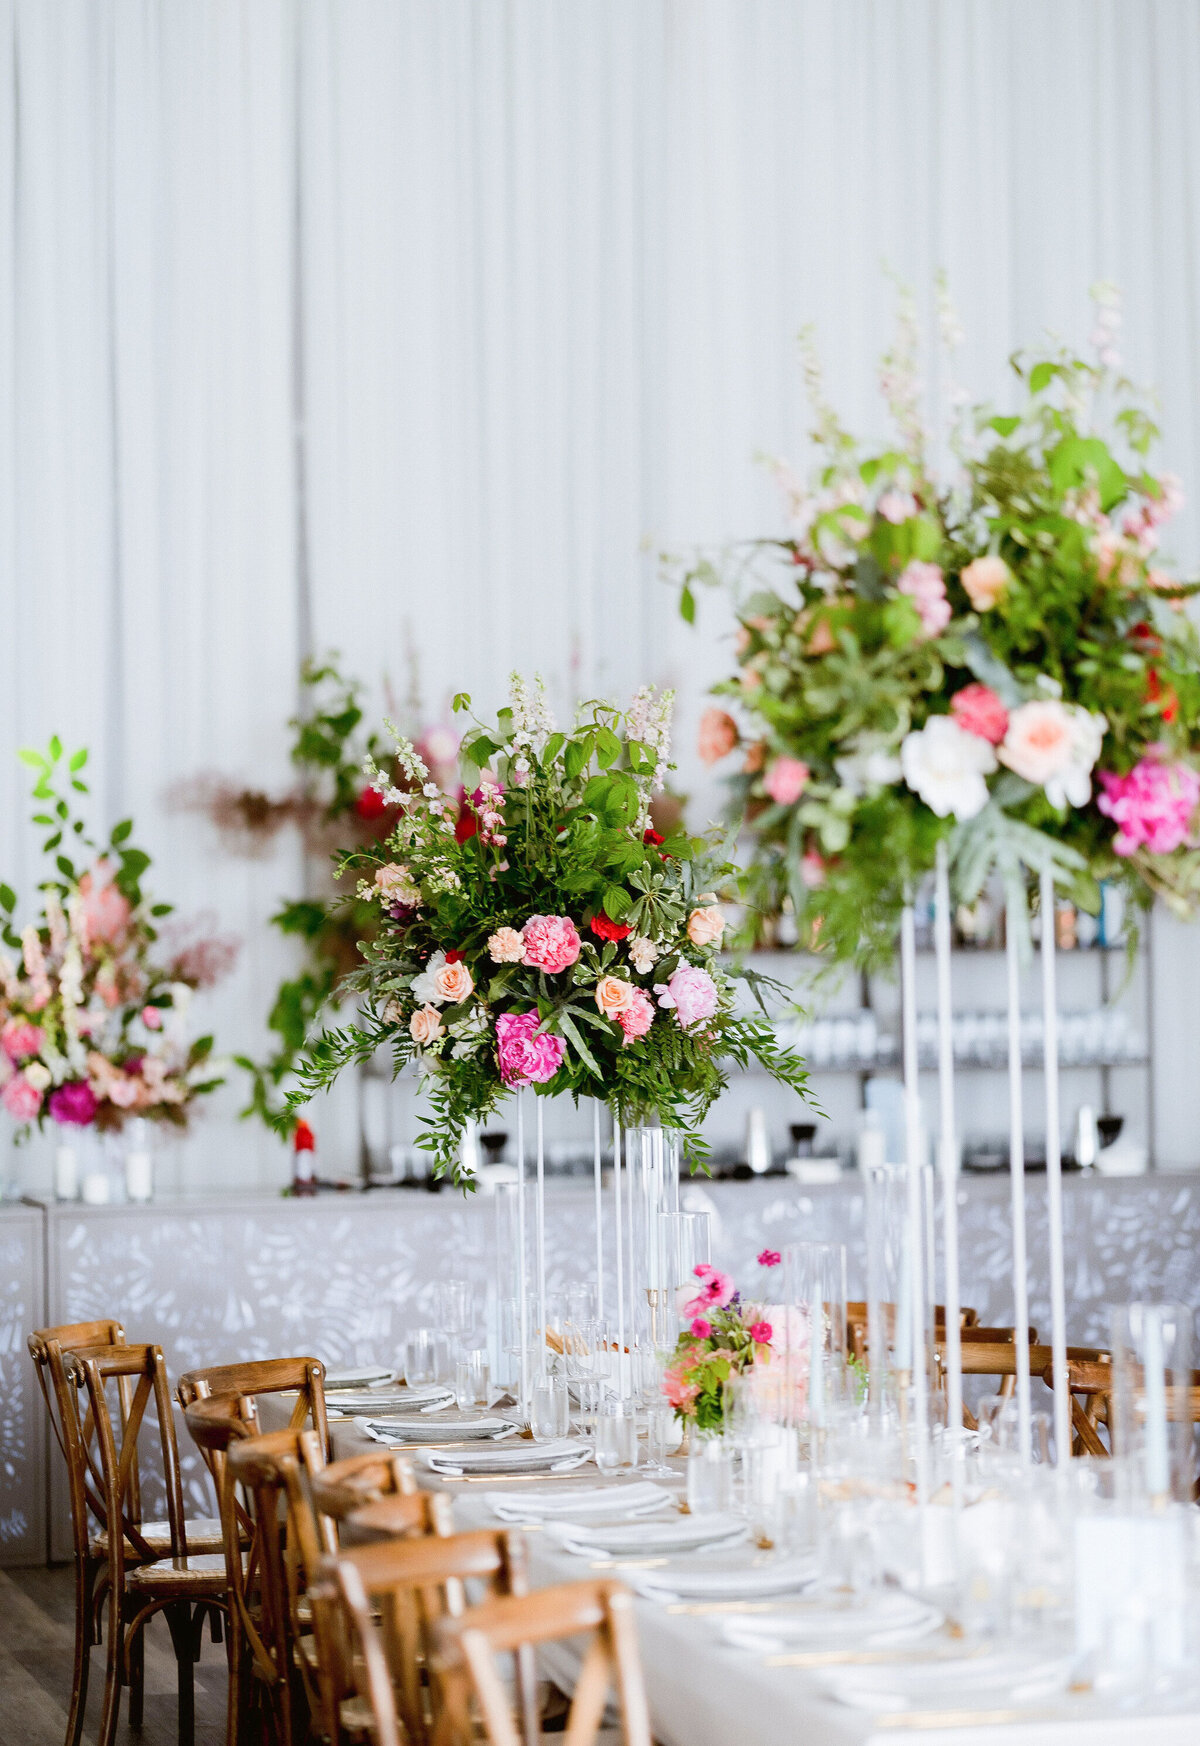 Atelier-Carmel-Montrea-Luxury-Wedding-Florist-GALLERIES-7